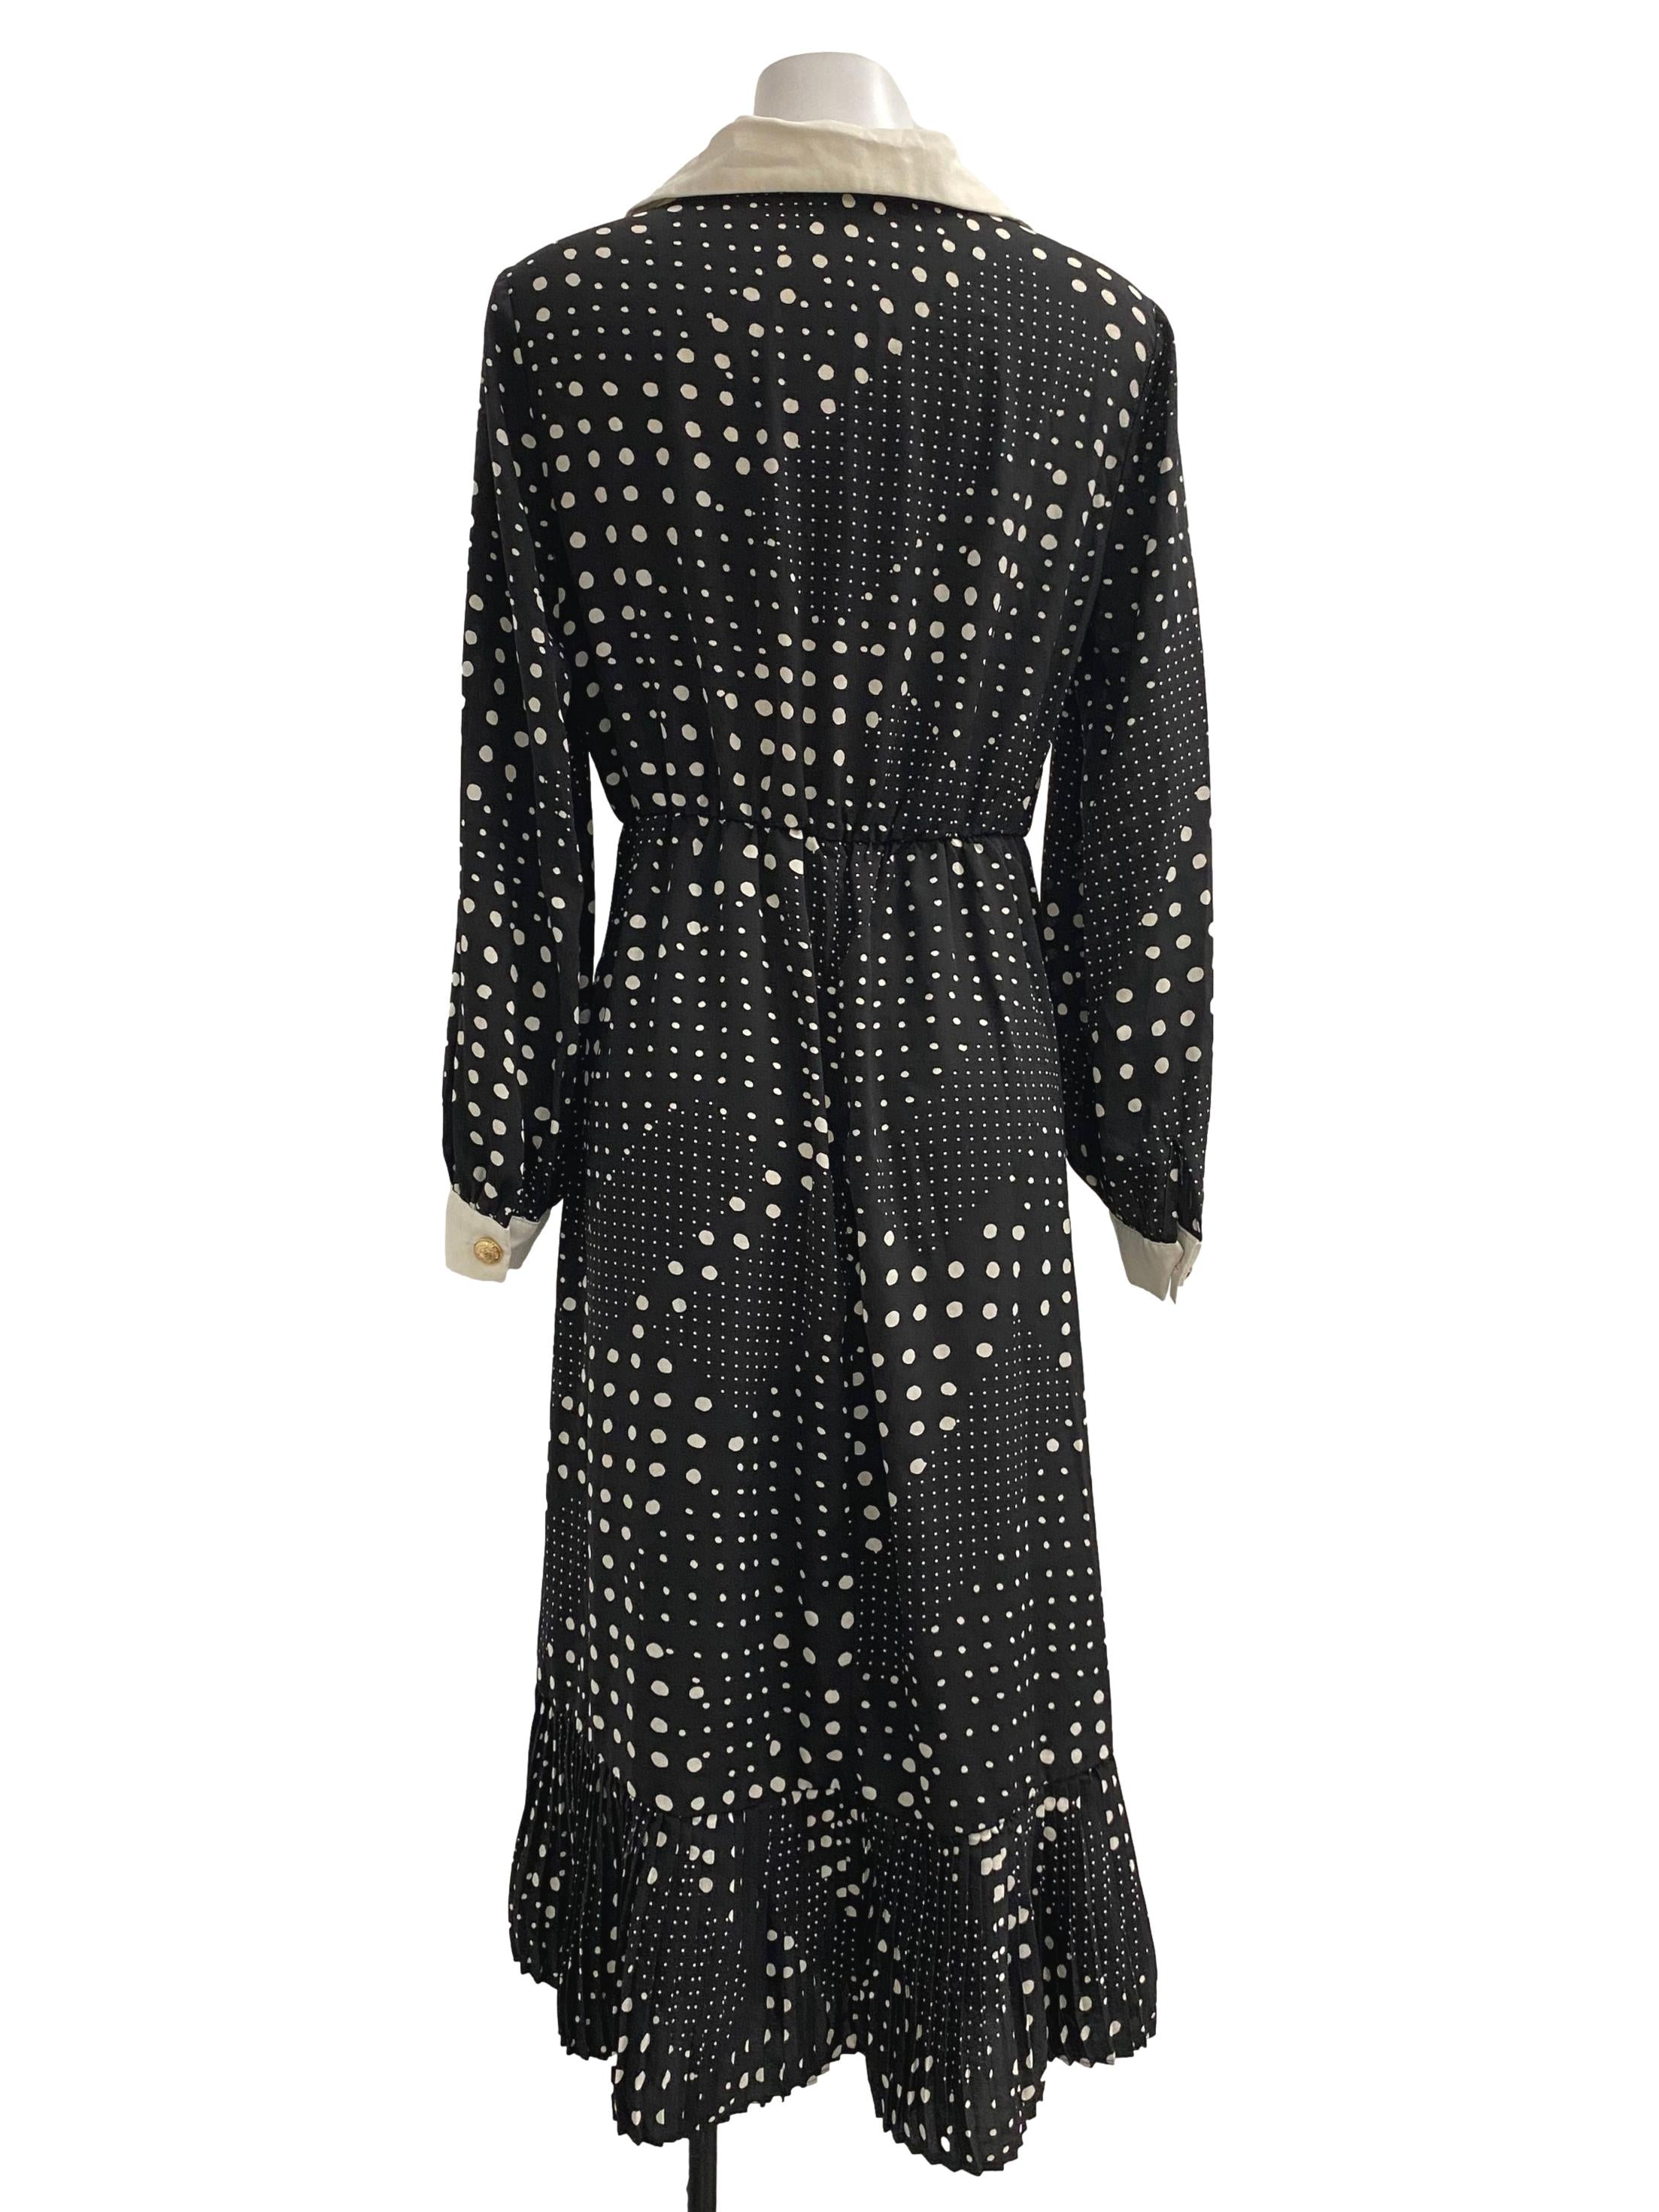 Black & White Mixed Dot Peterpan-Collar Dress